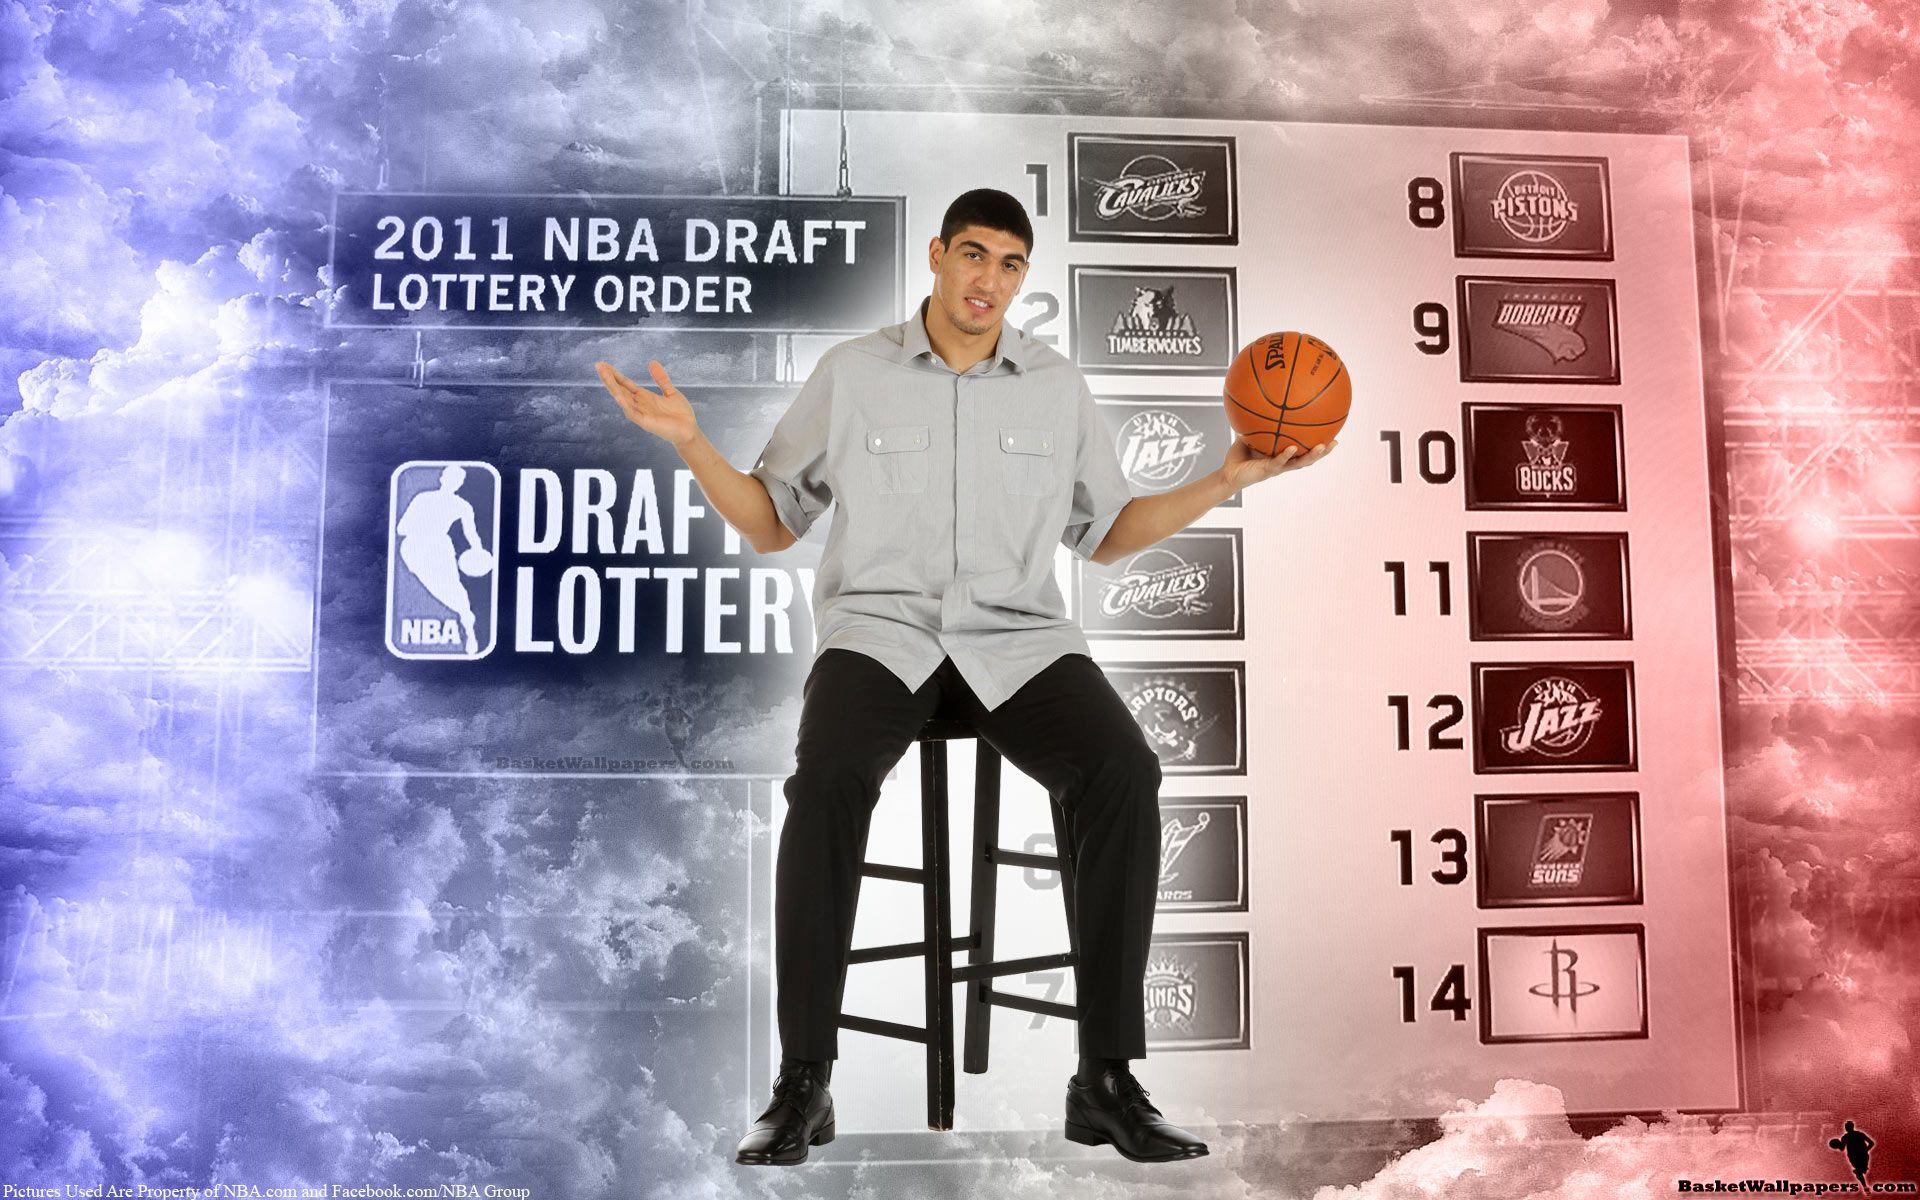 Enes Kanter 2011 NBA Draft Widescreen Wallpaper. Basketball